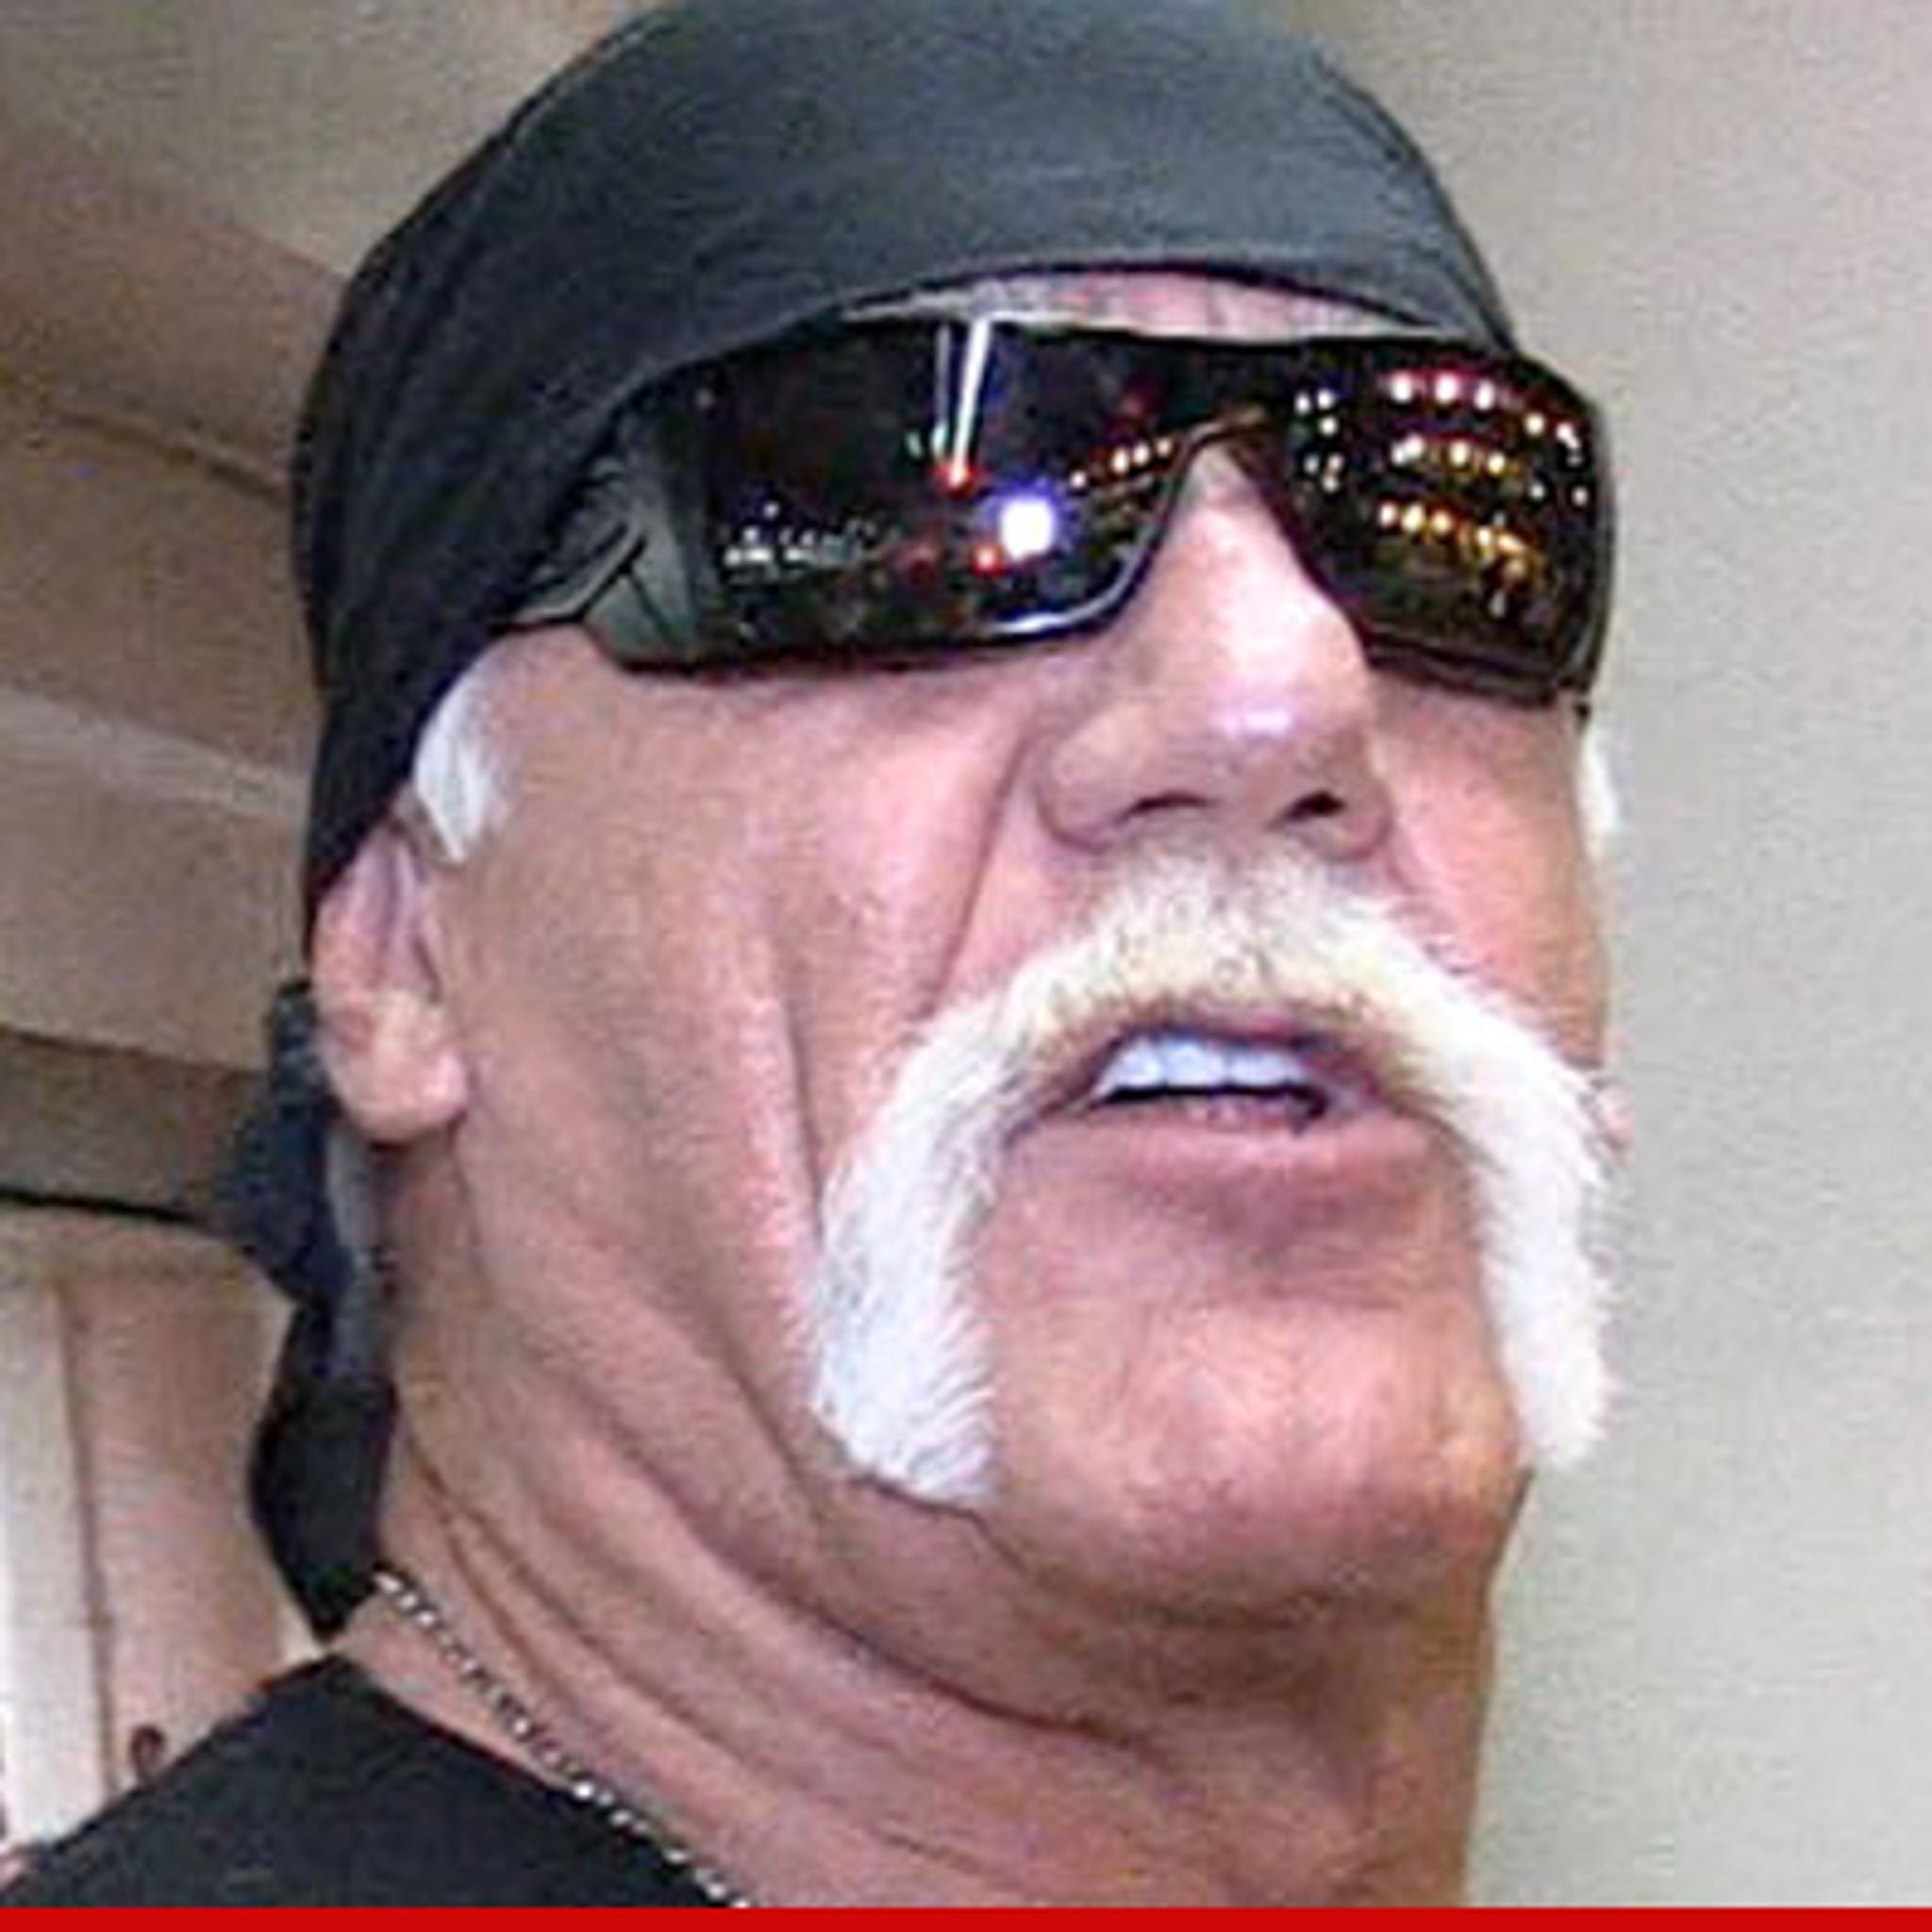 Hulk Hogan -- Sex Tape N-Word Rant Is Not Who I Am